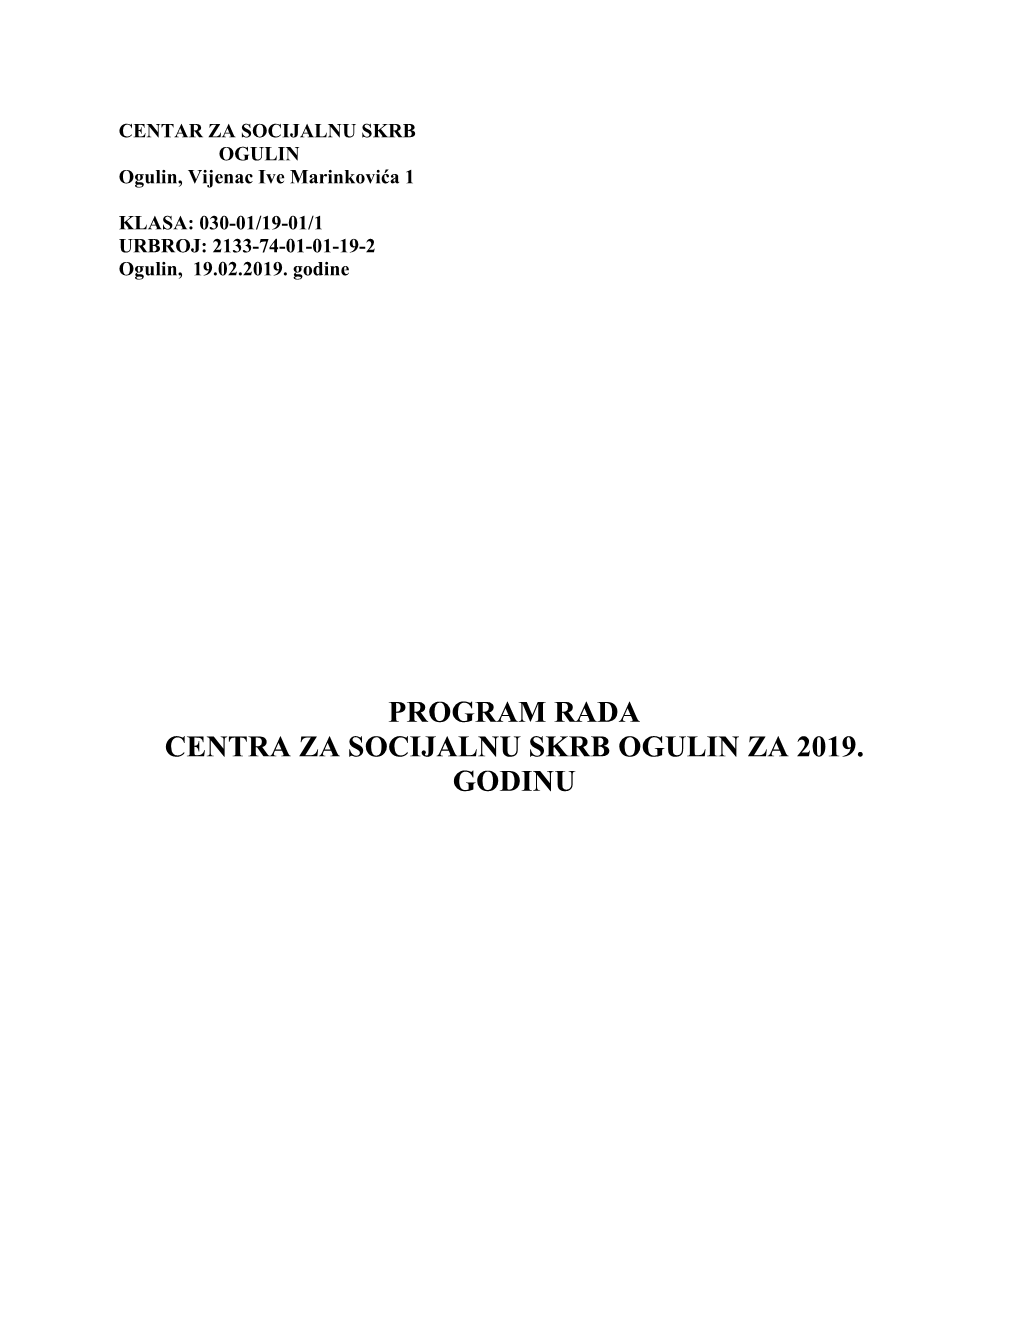 Program Rada 2019.G